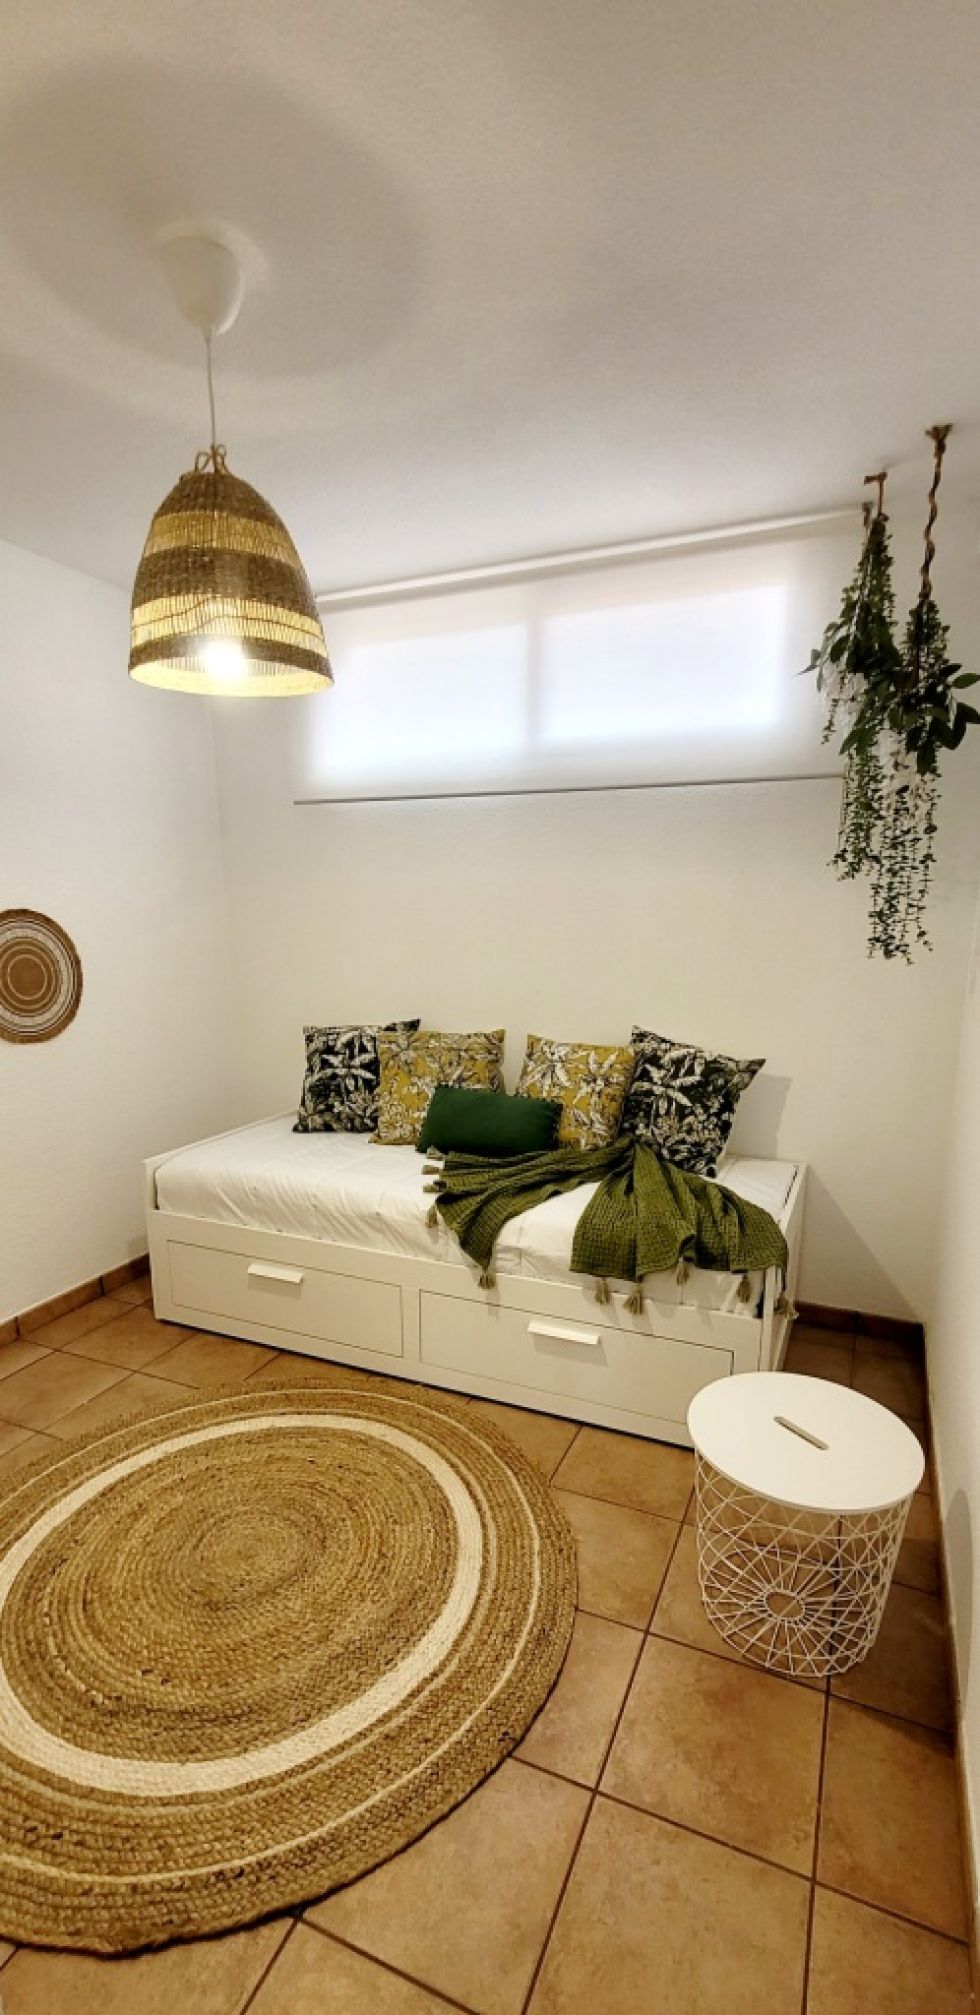 Apartment for sale in  El Naranjal, Costa Adeje, Spain - TRC-2739